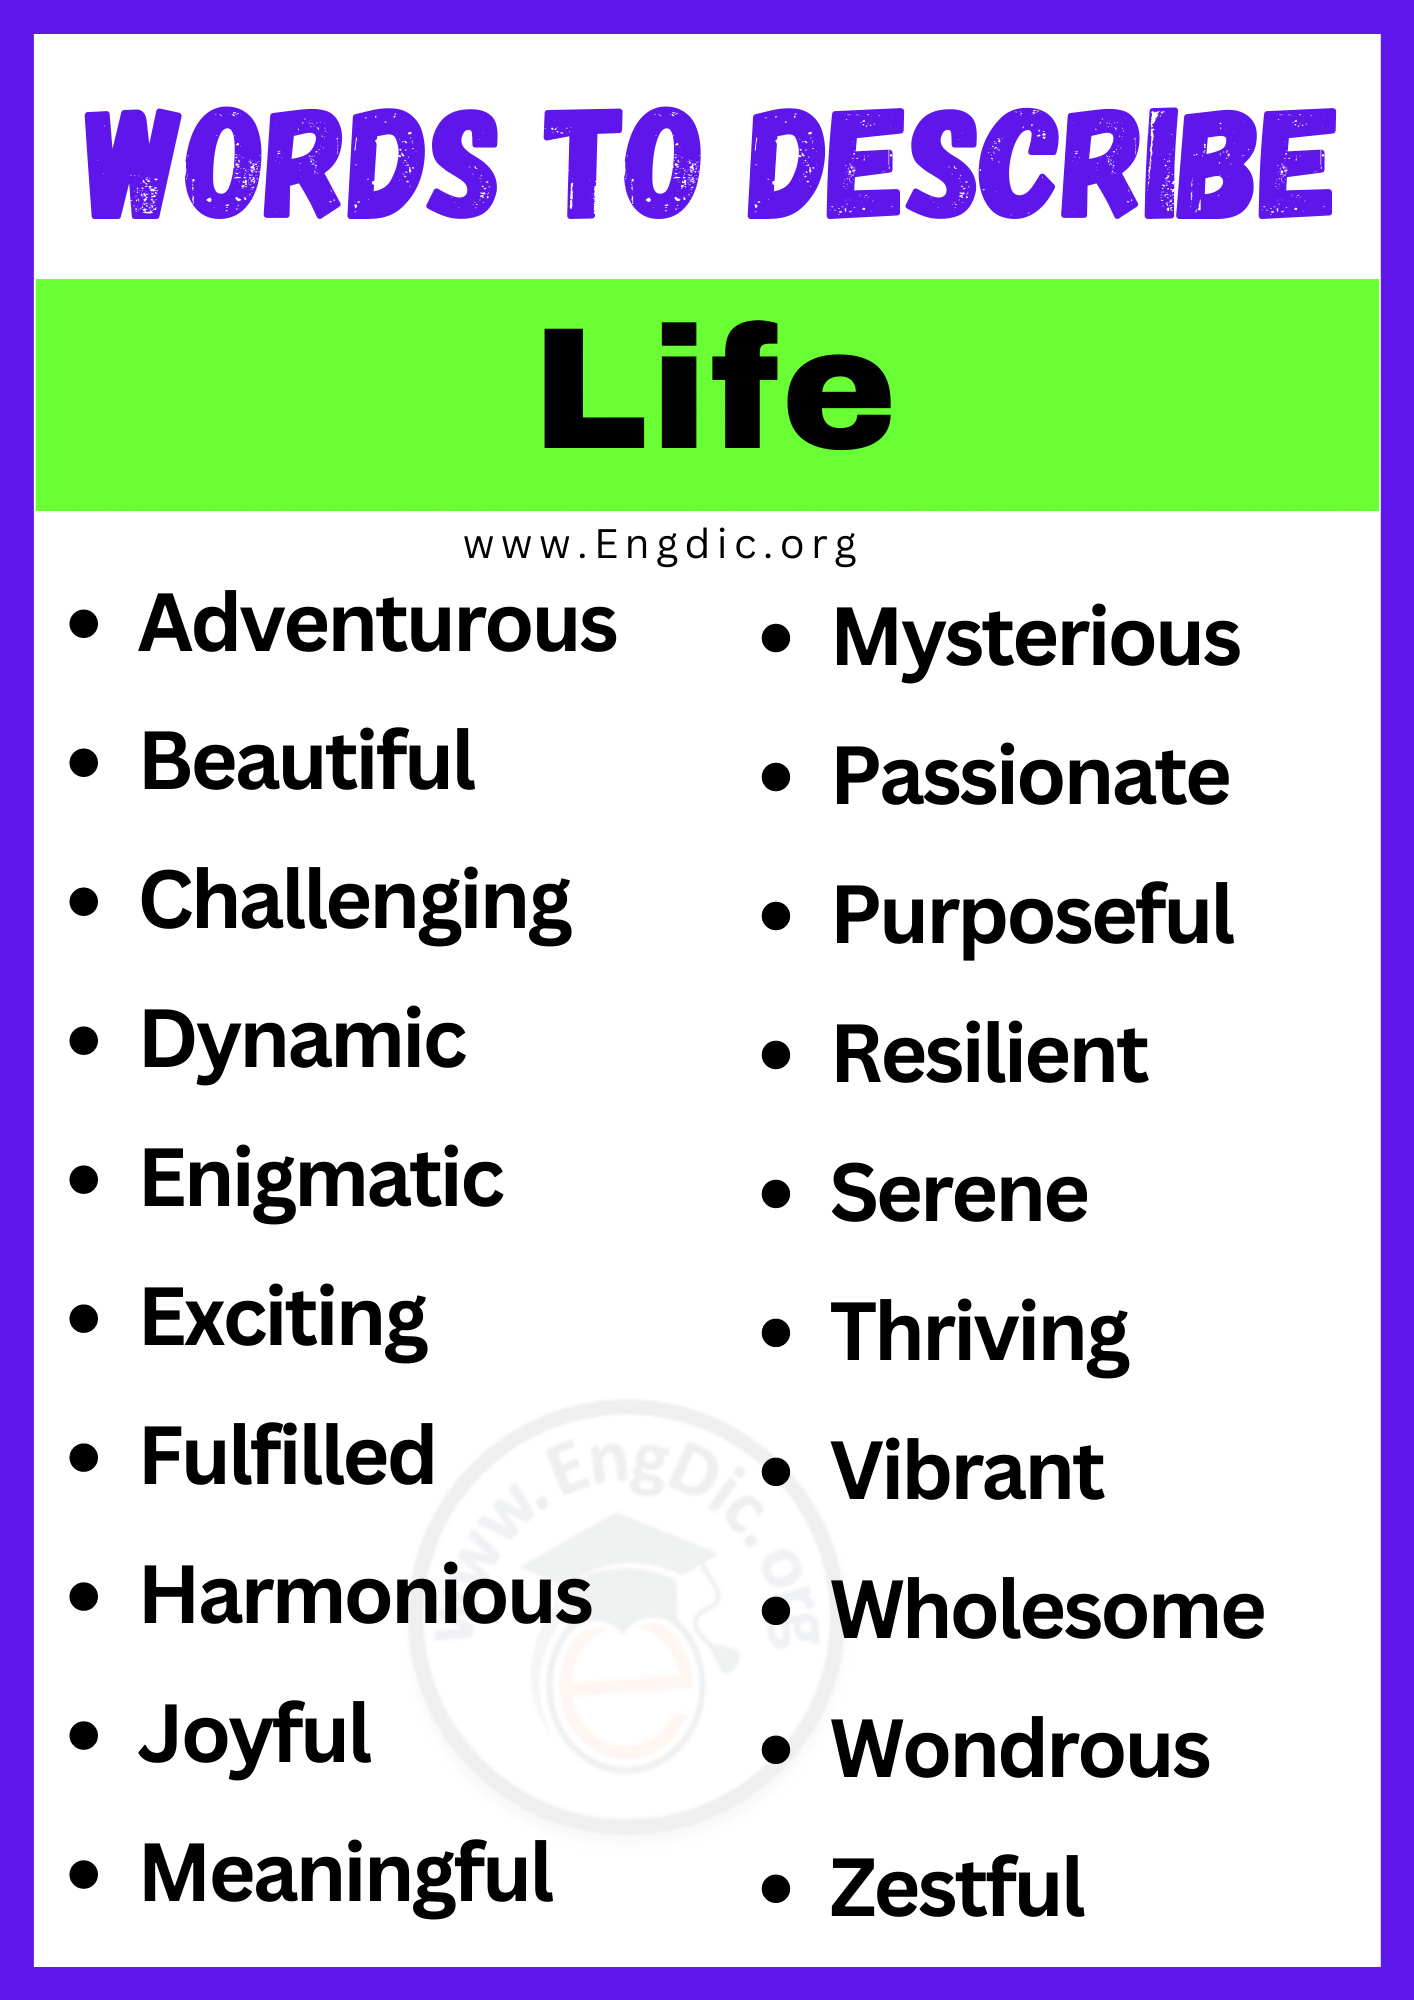 Words to Describe Life